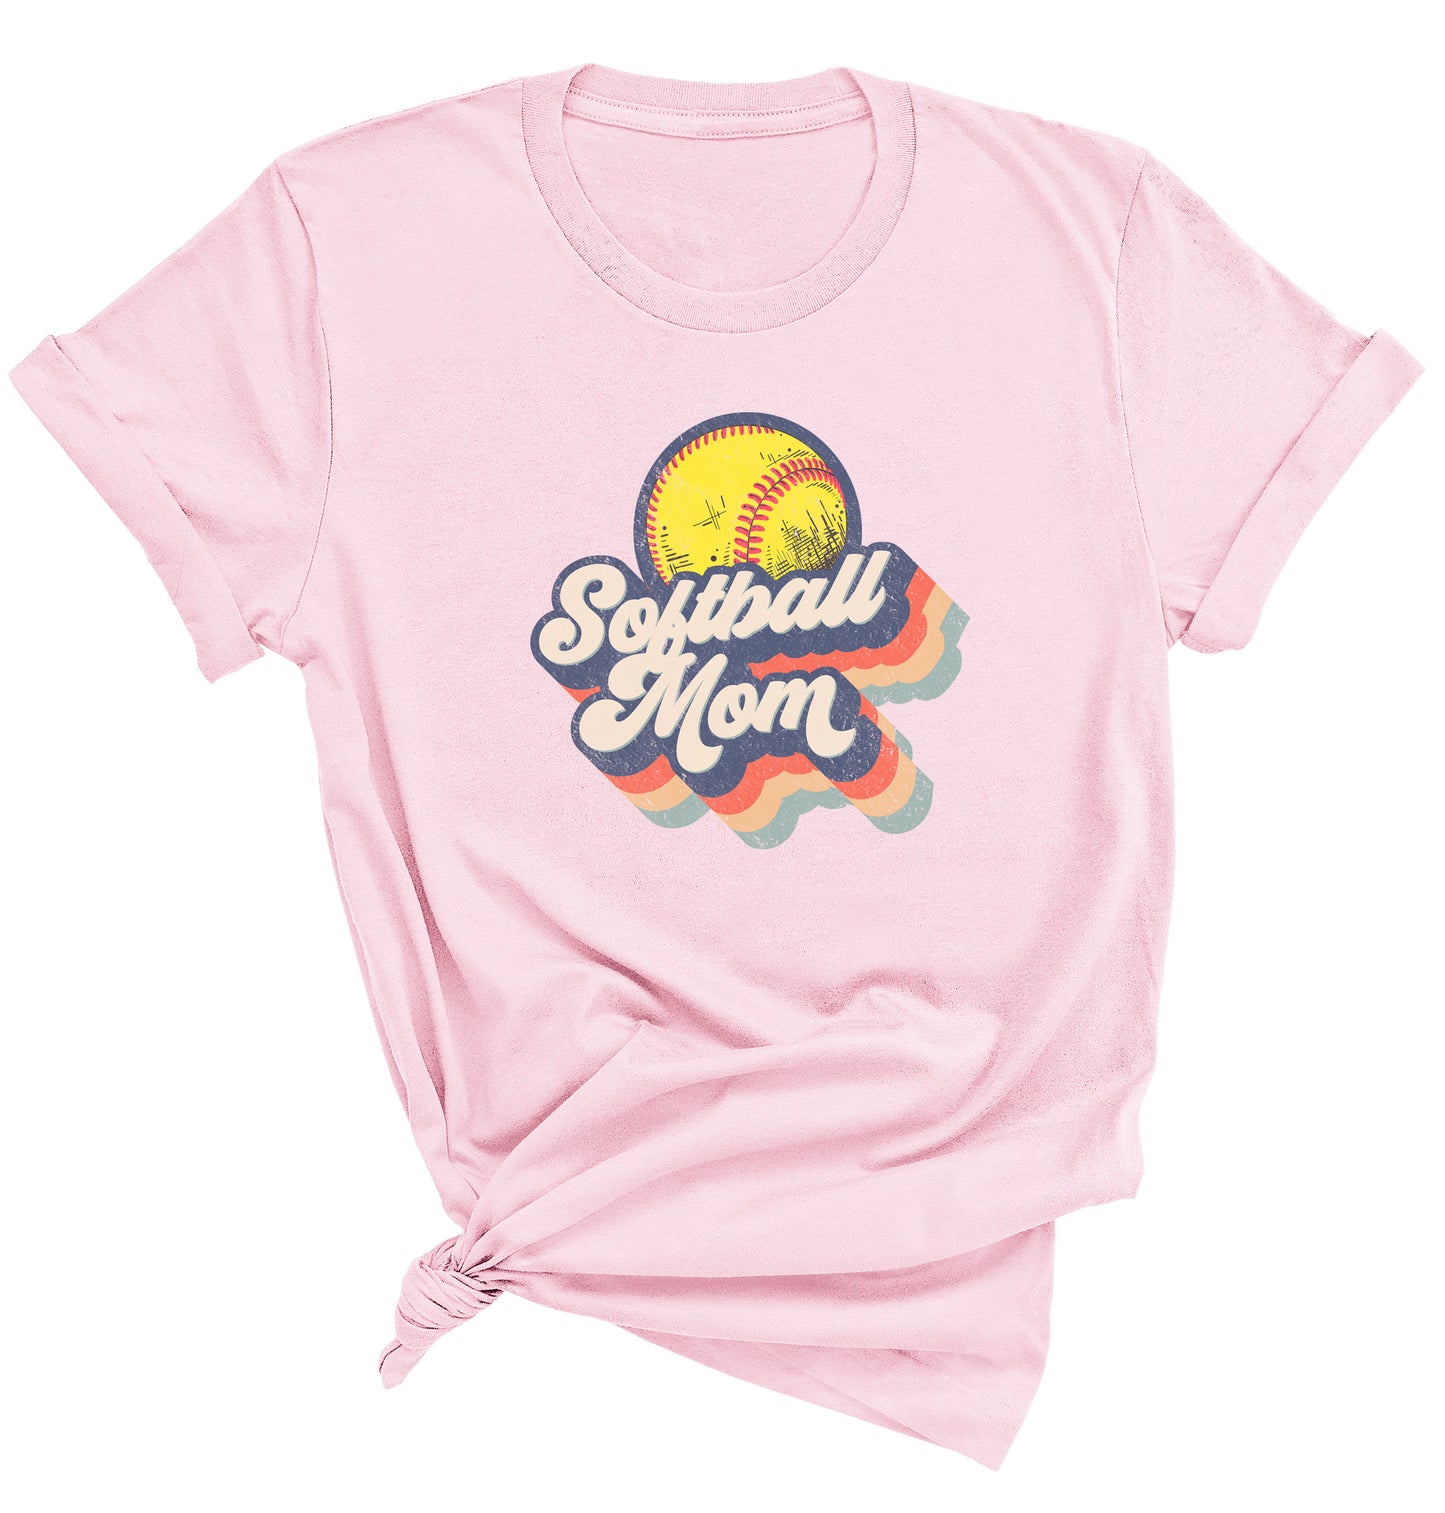 Retro Softball Mom Tee